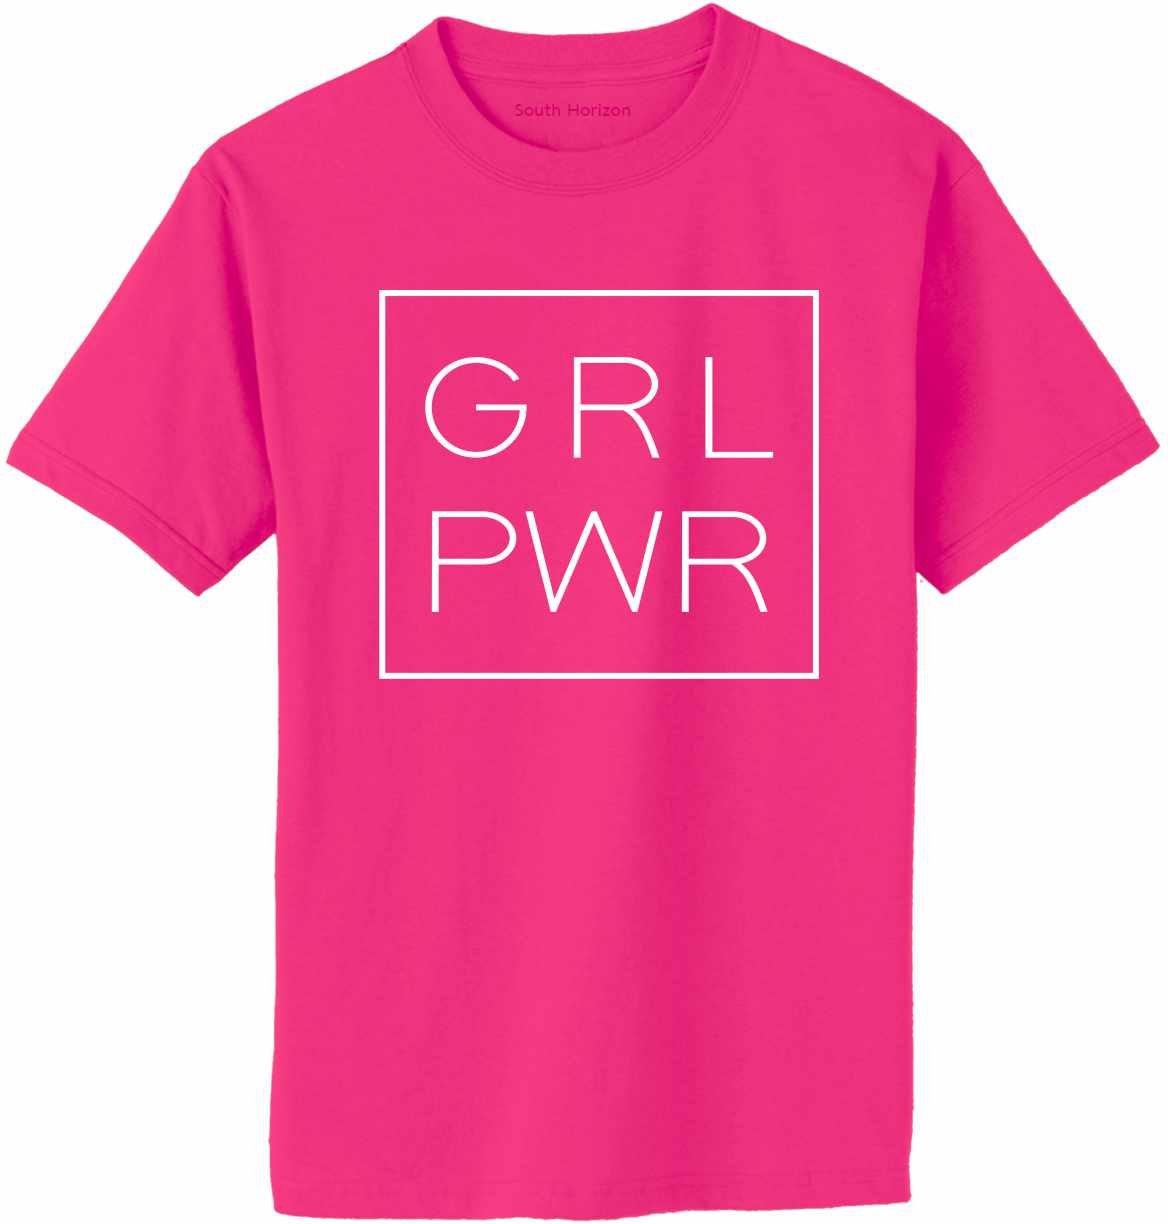 Girl Power on Adult T-Shirt